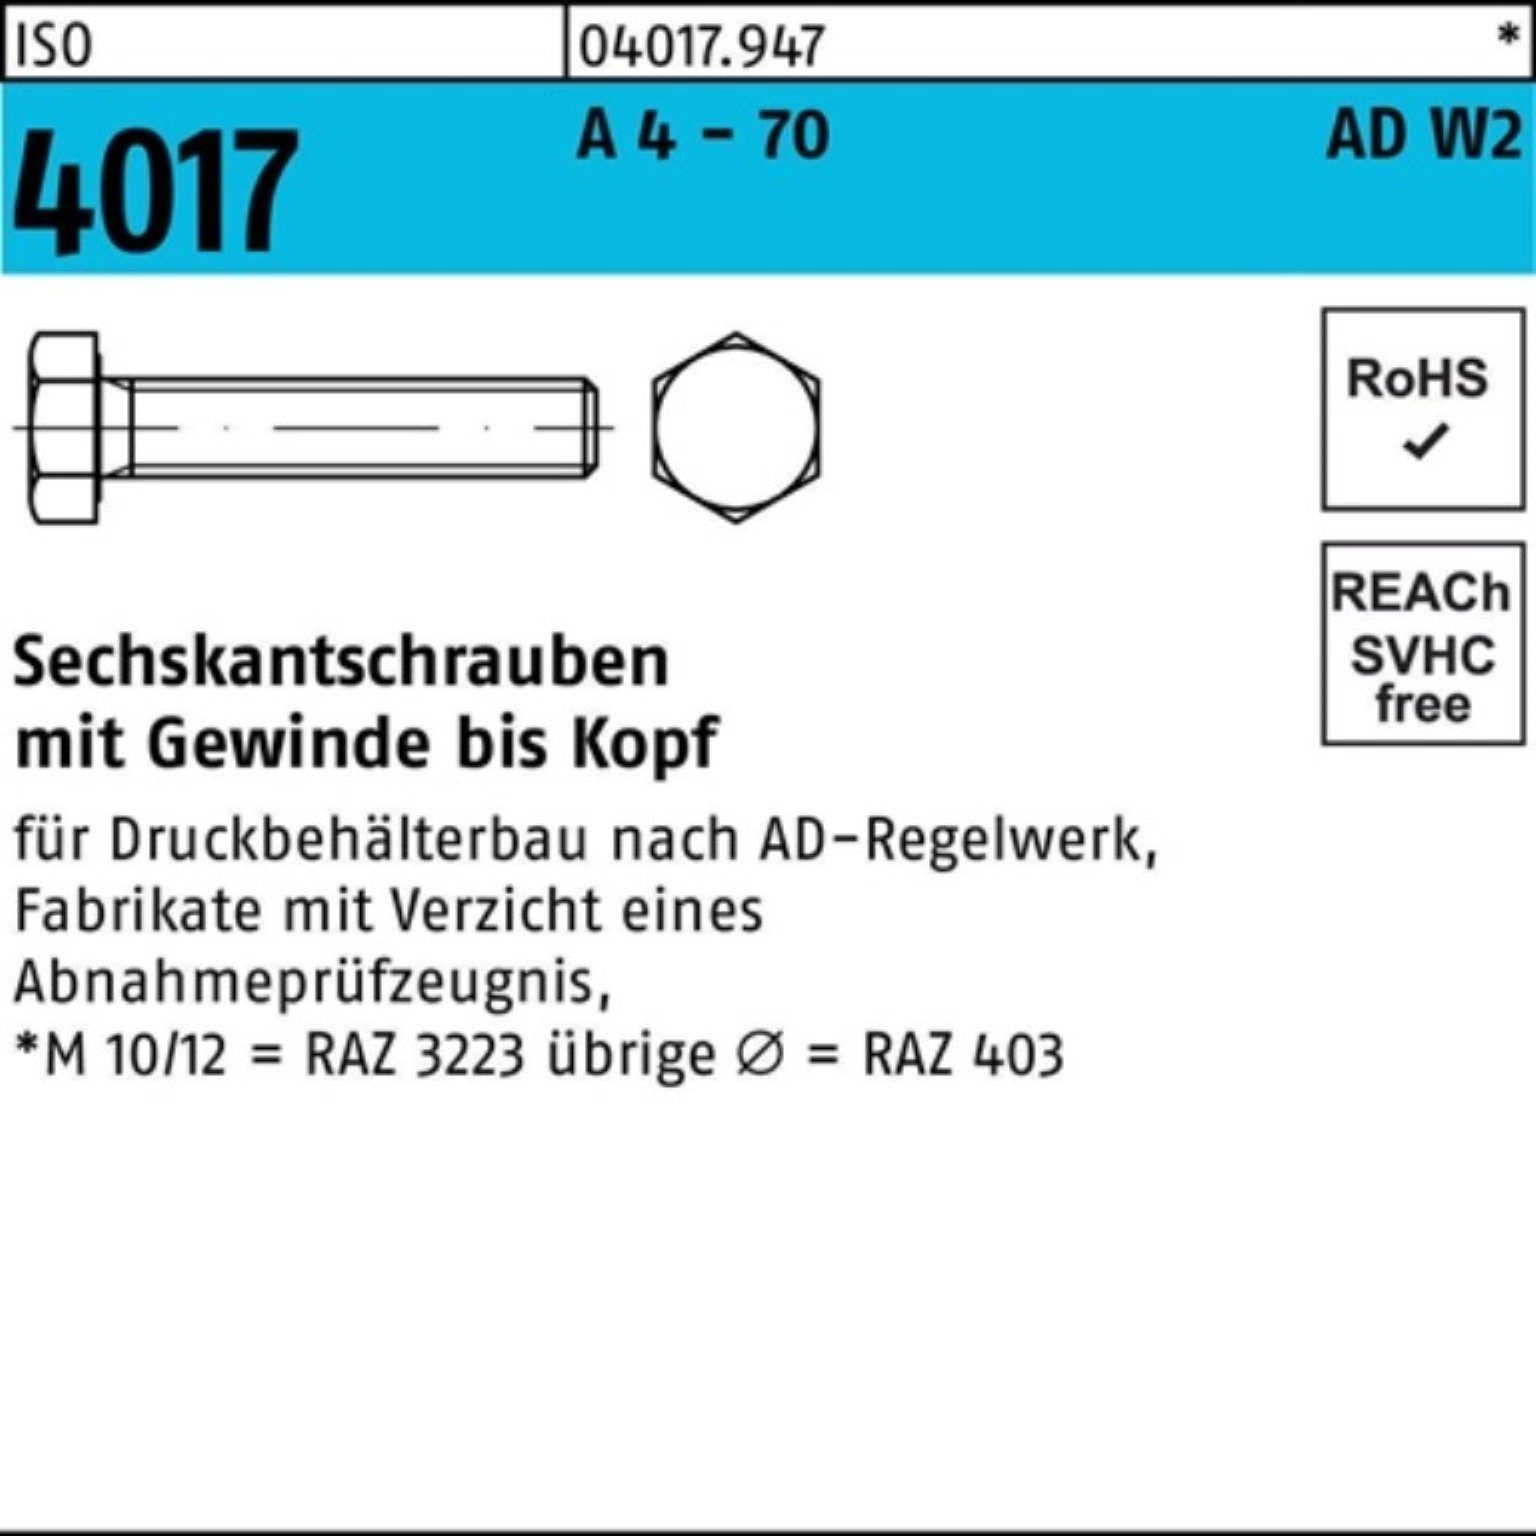 Bufab St Sechskantschraube AD-W2 65 Sechskantschraube - 25 Pack 70 100er A M16x 4017 4 ISO VG